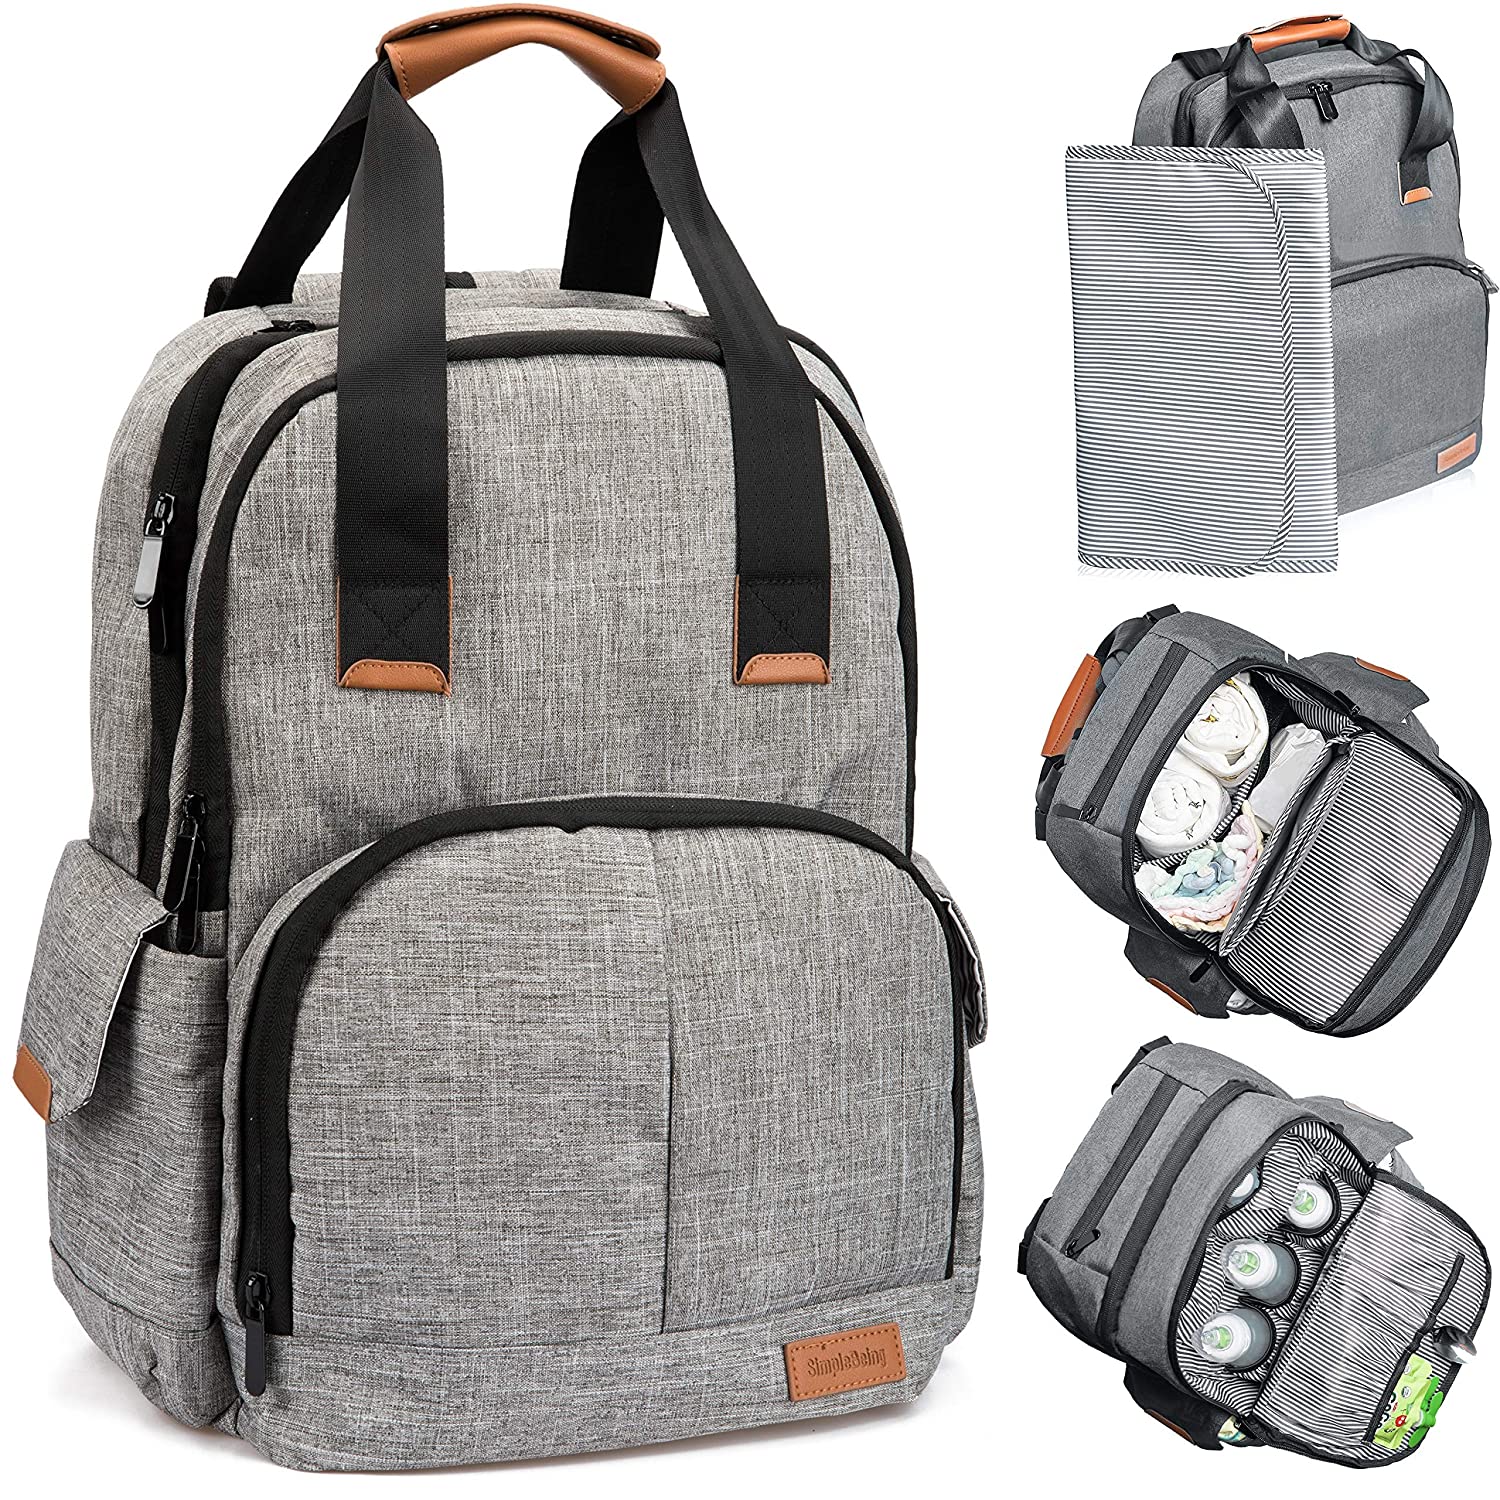 Simple Being Baby Diaper Bag Backpack Cooler, Multi-Function Travel Bags (Grey)